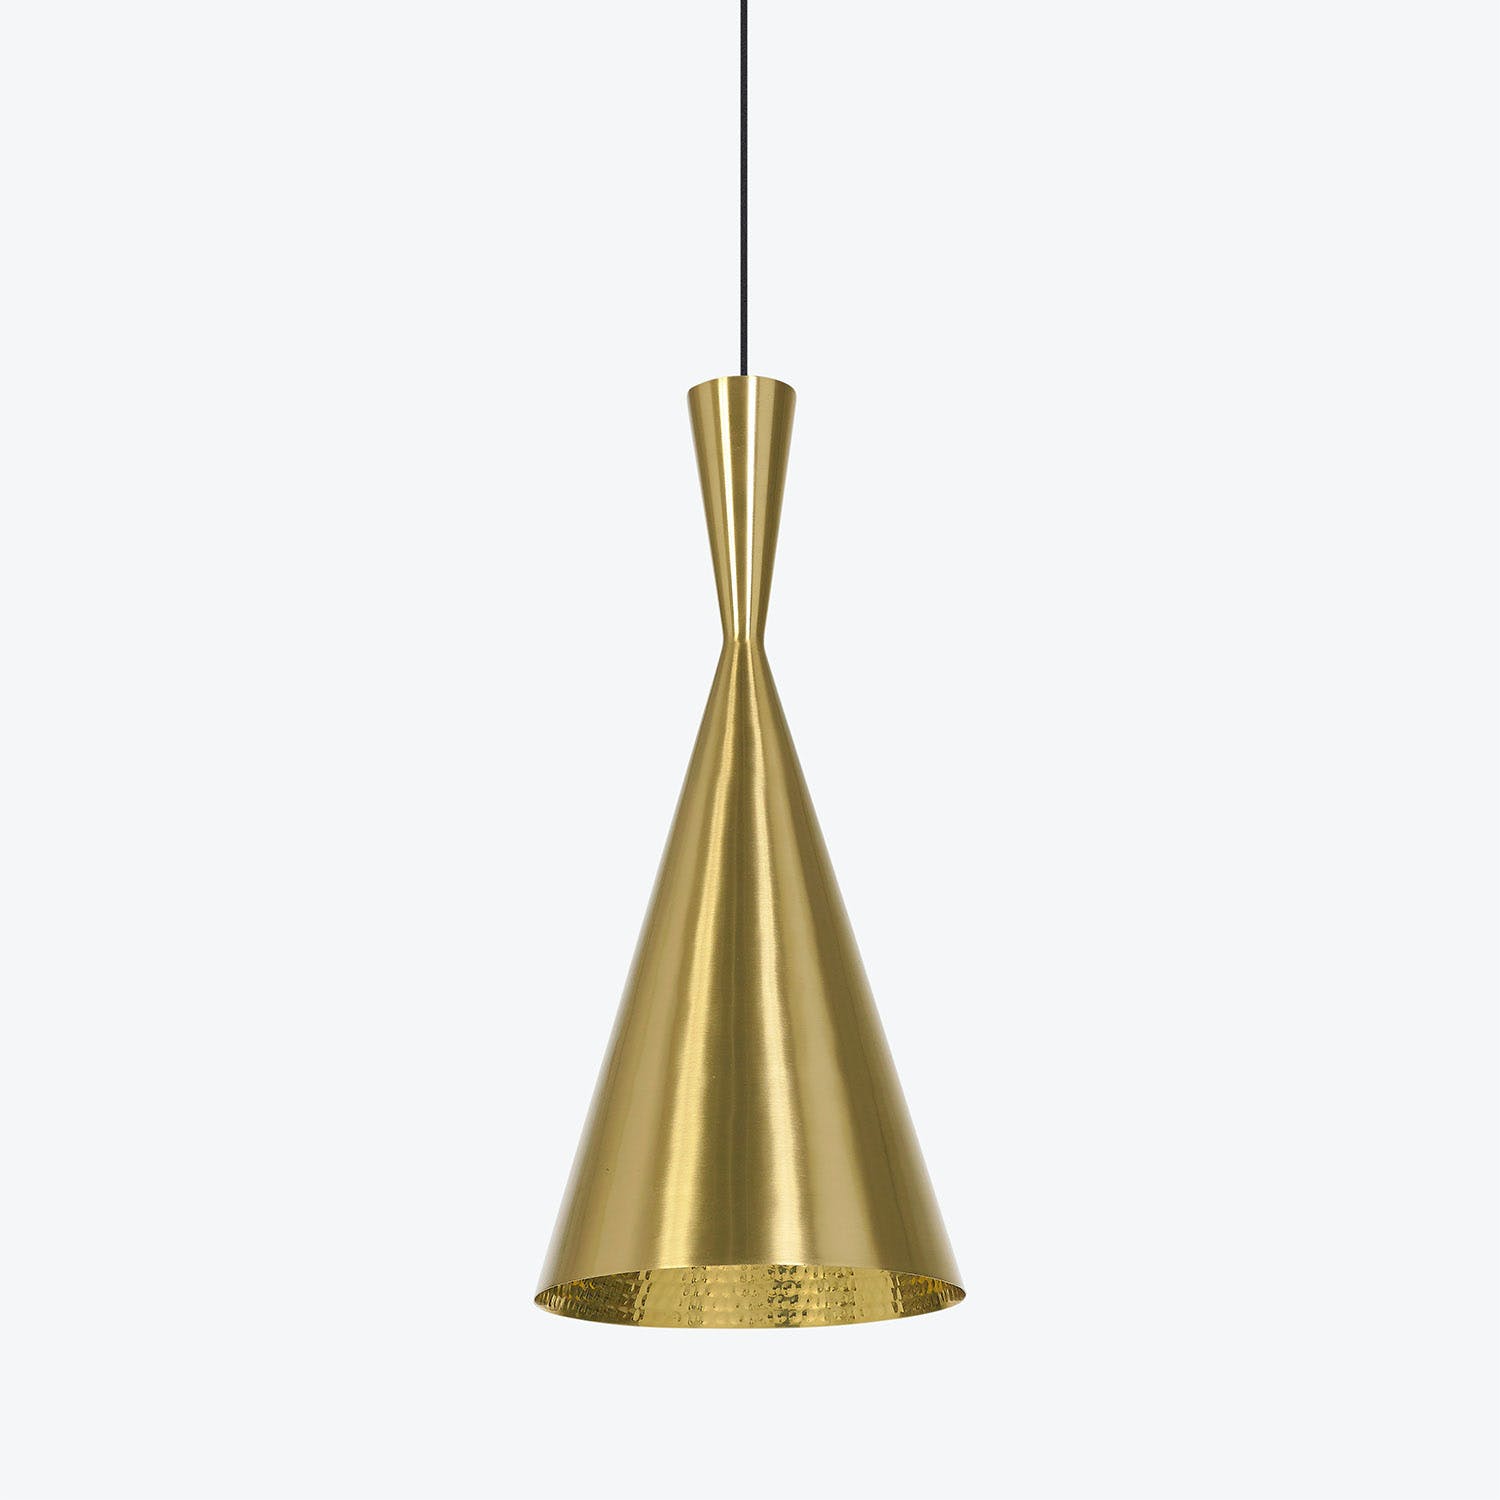 Modern pendant light fixture in matte gold exudes contemporary elegance.